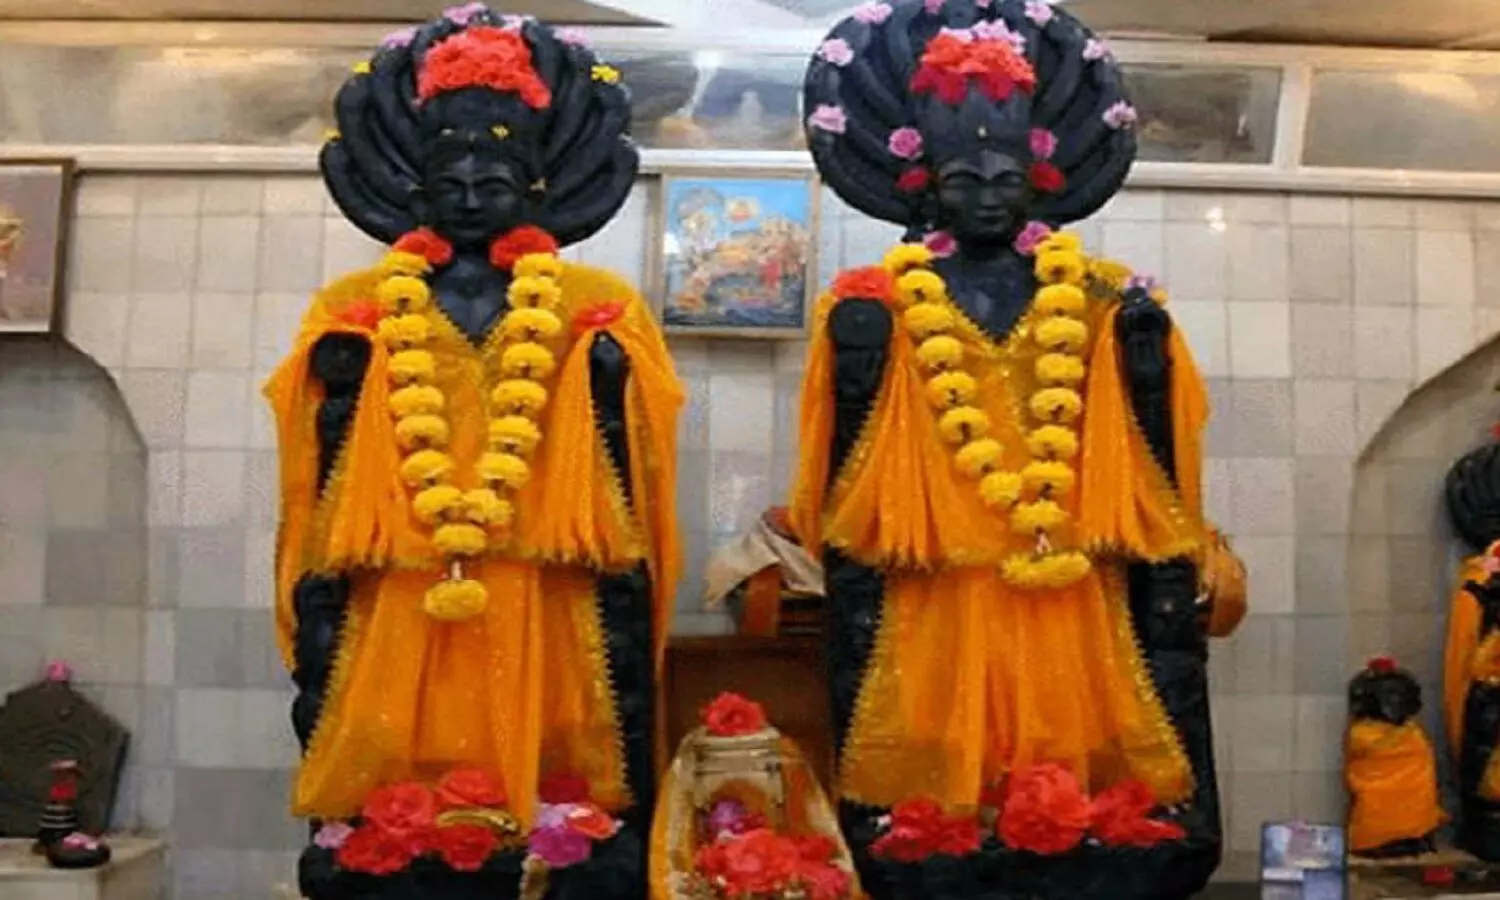 Nagvasuki temple in prayagraj up